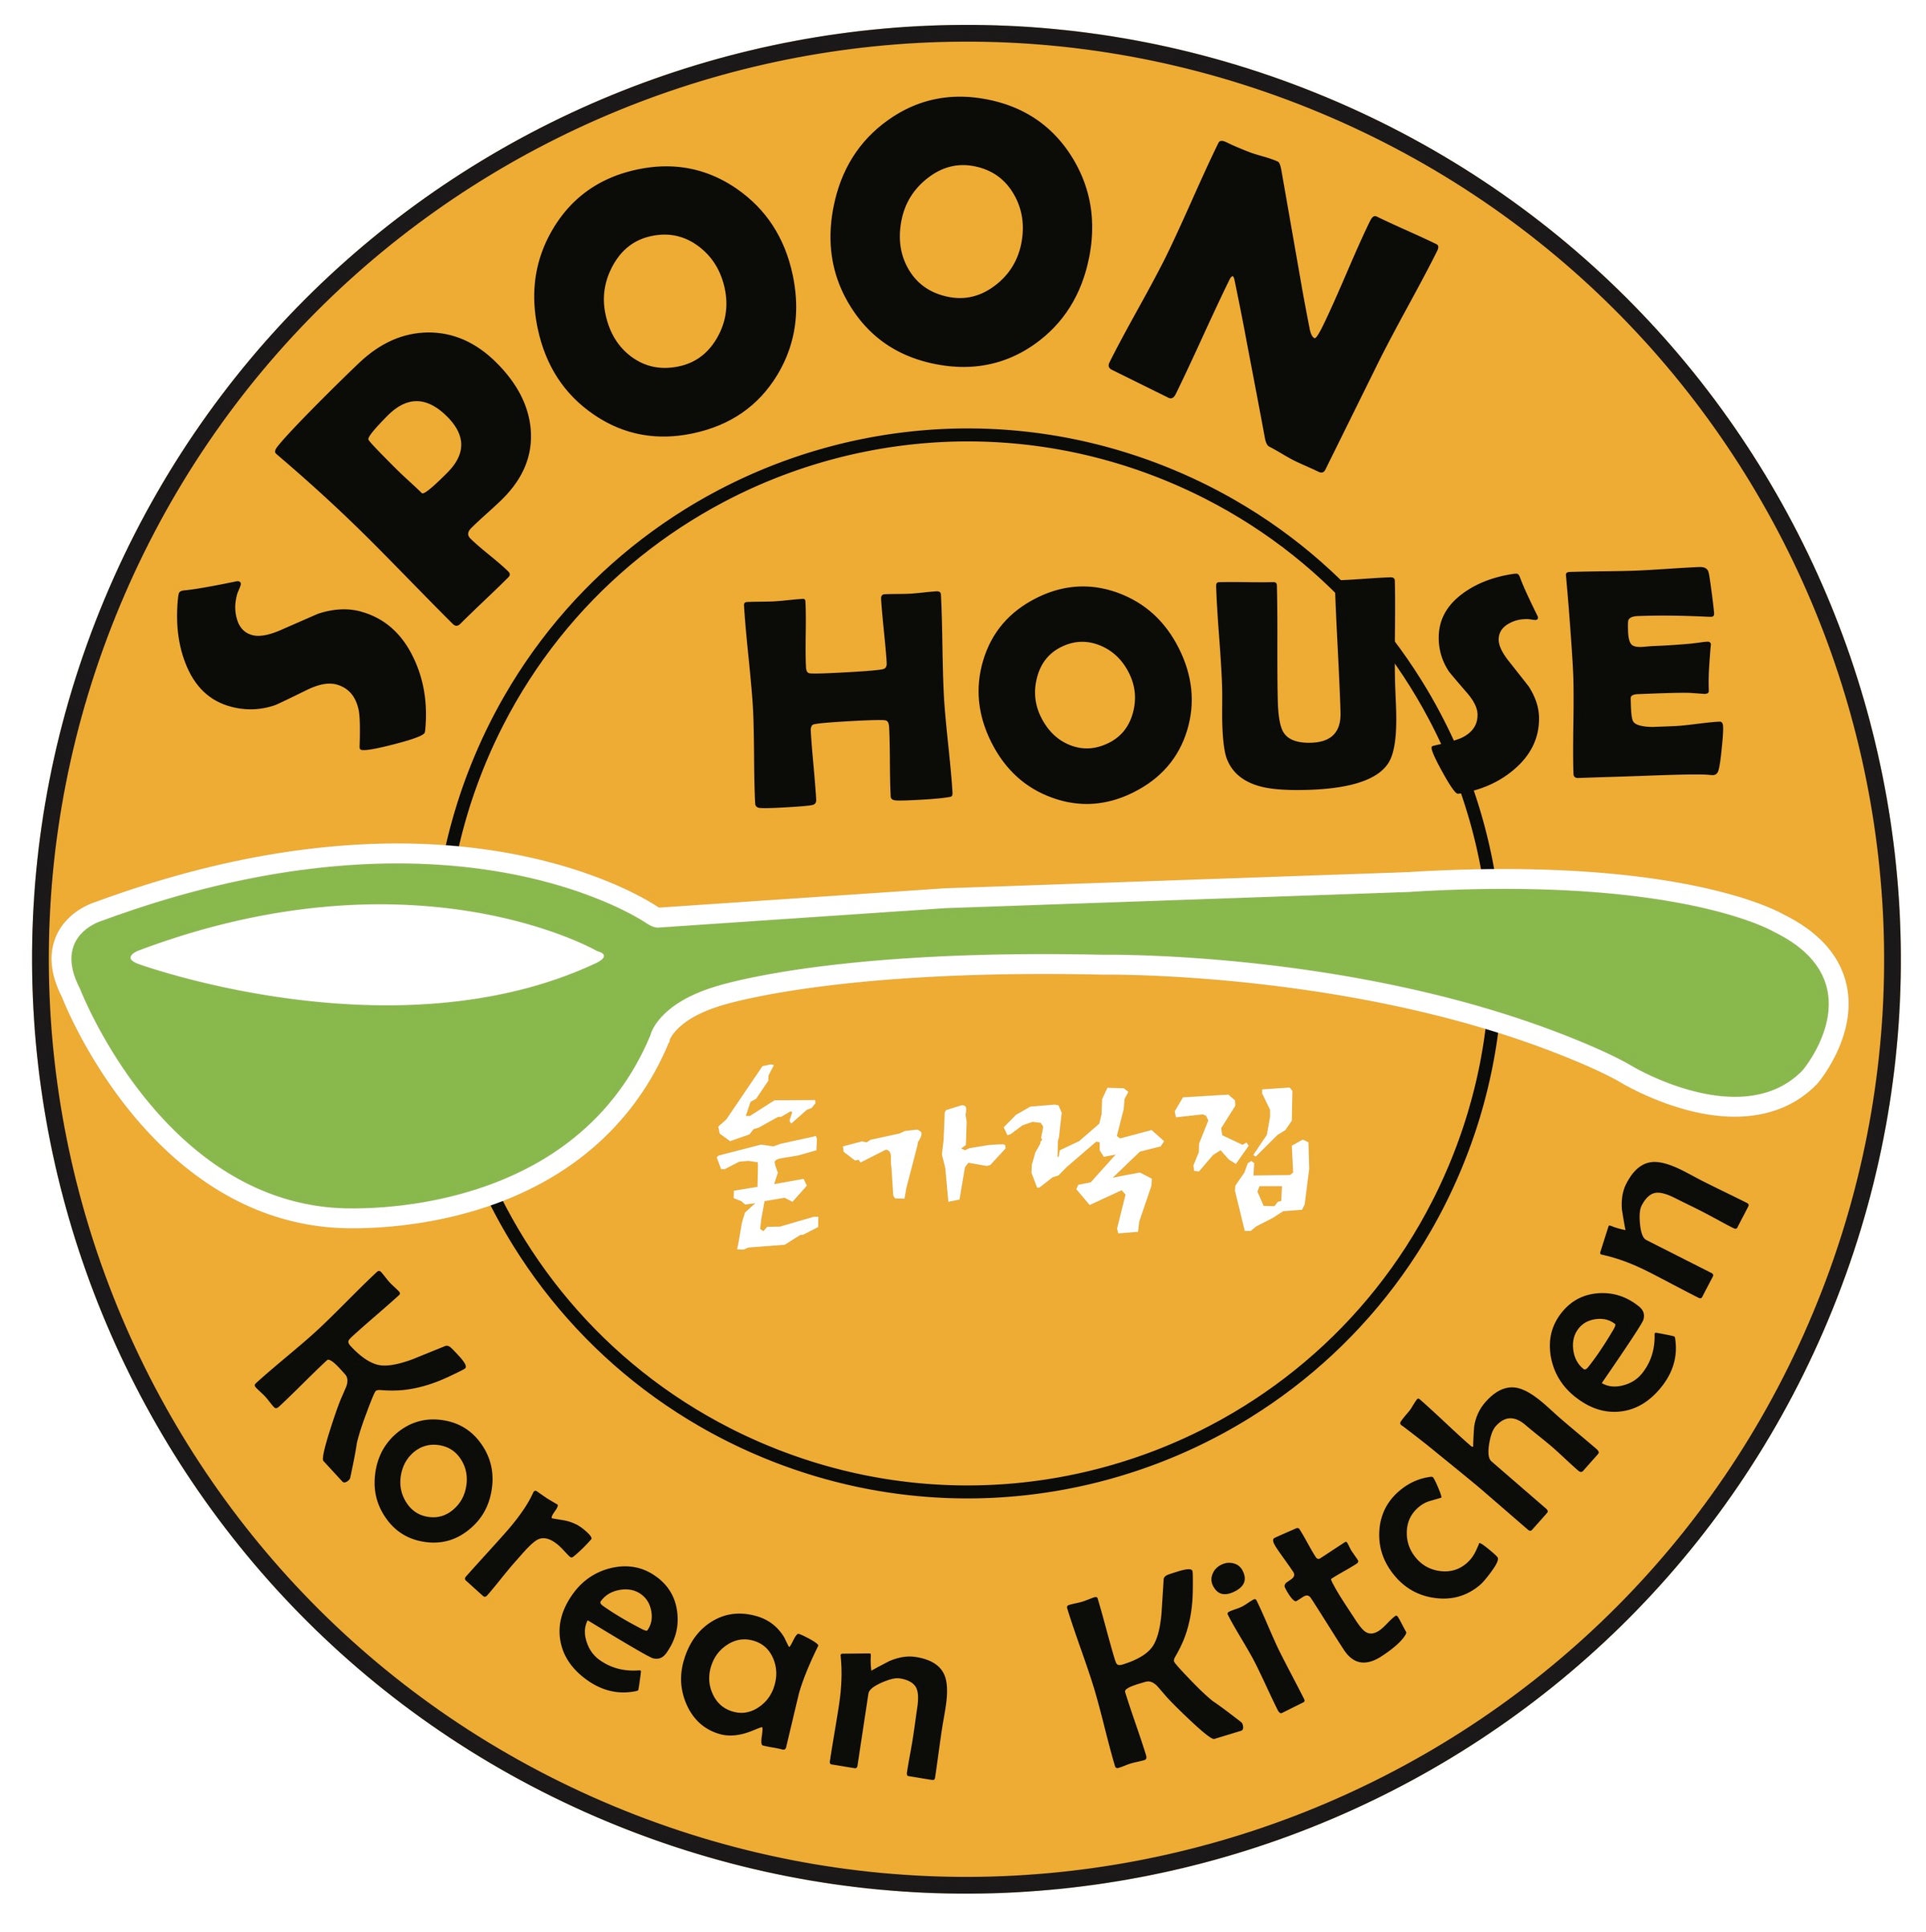 Korean Kitchen 